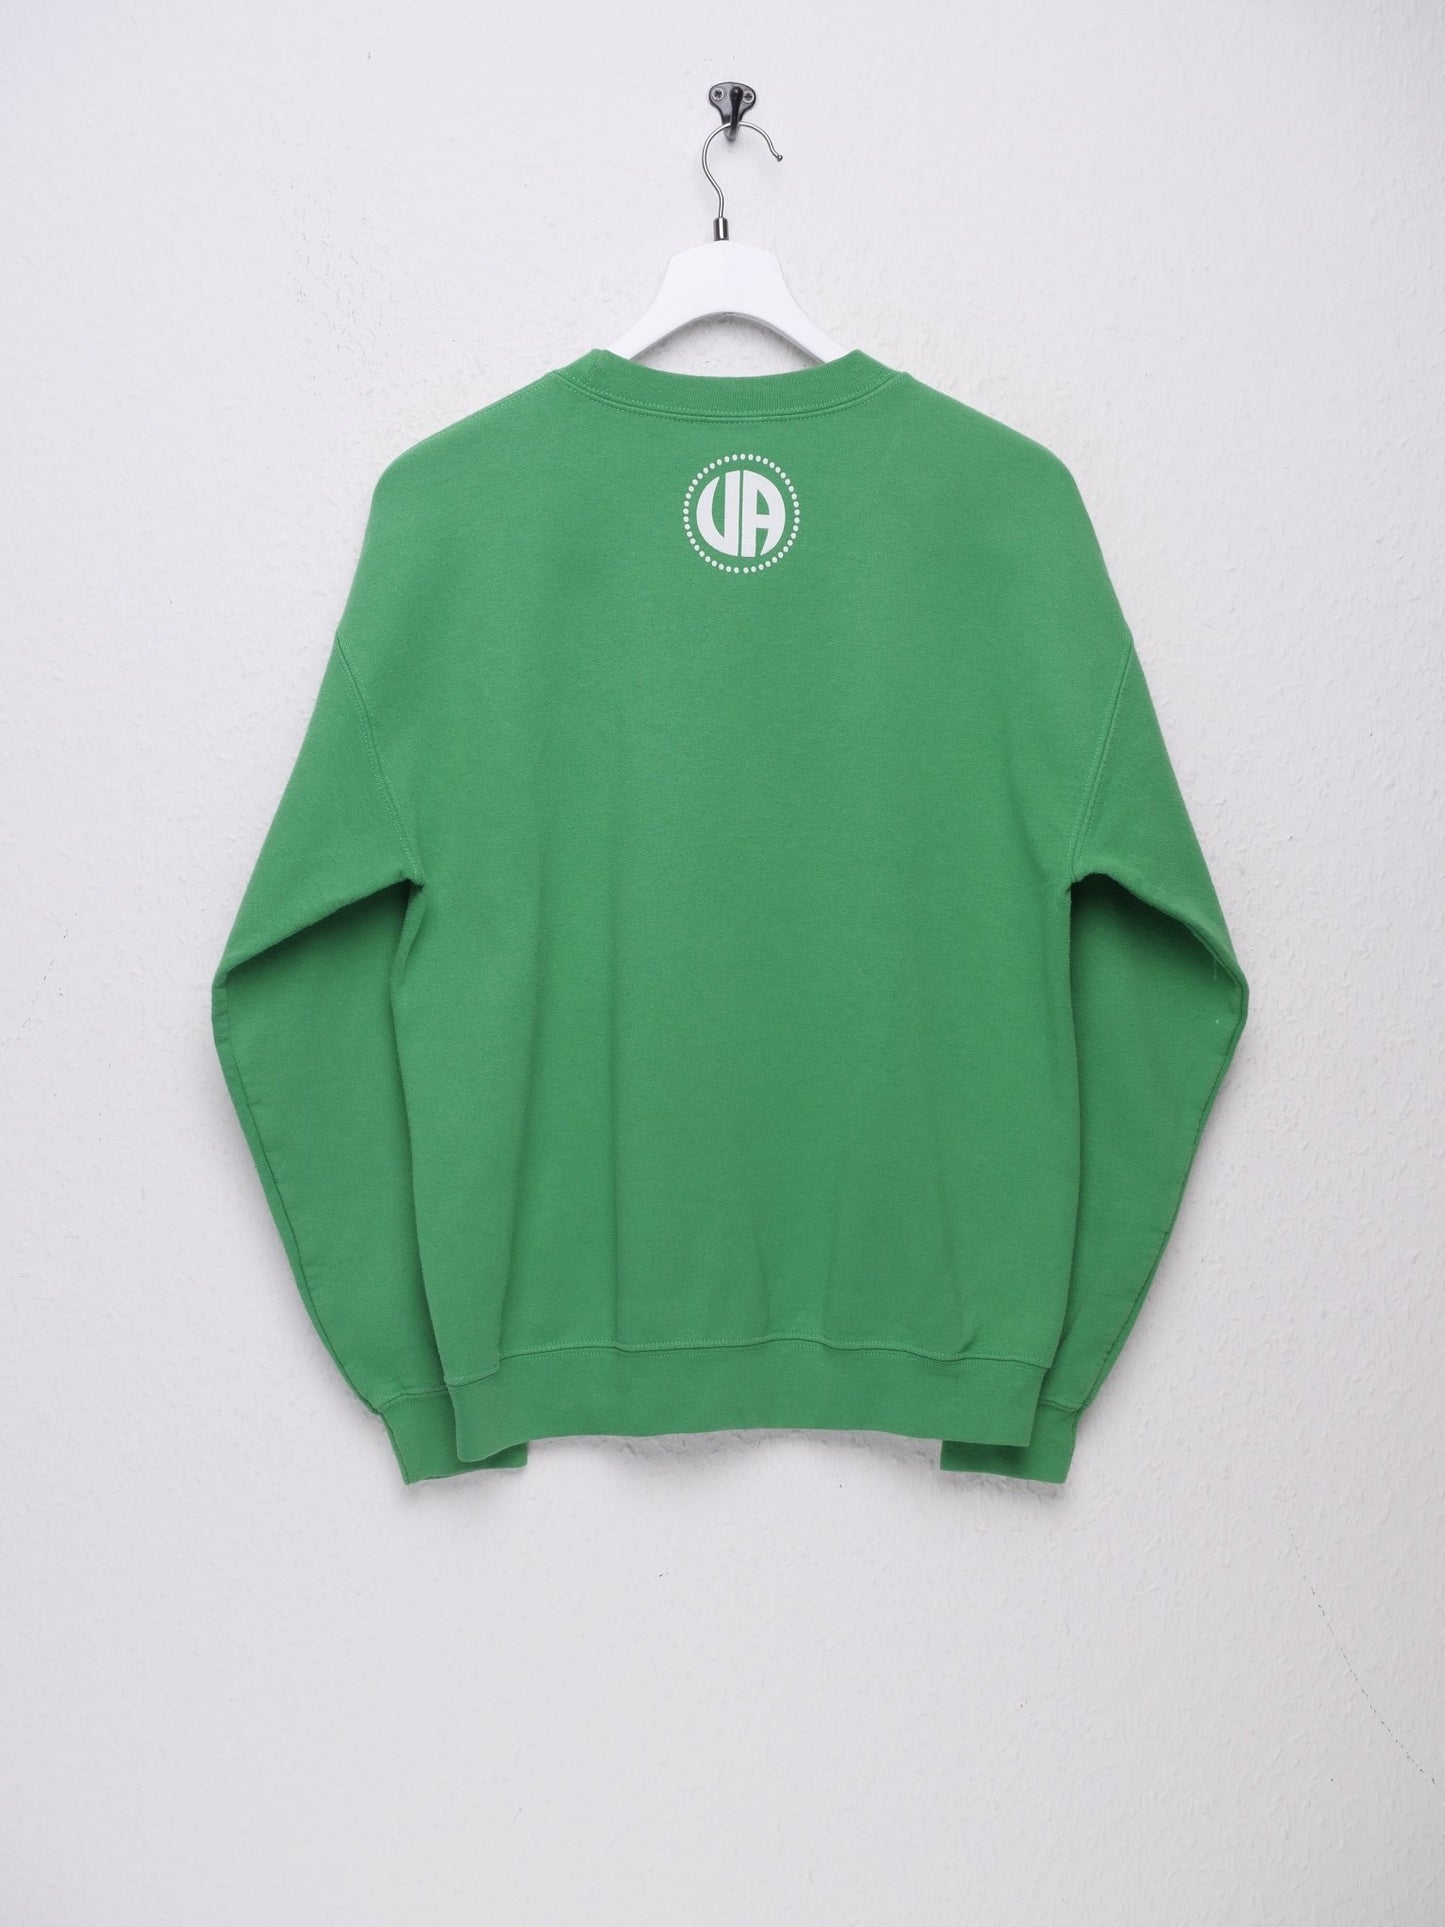 Ursuline Academy Lions printed Logo green Sweater - Peeces